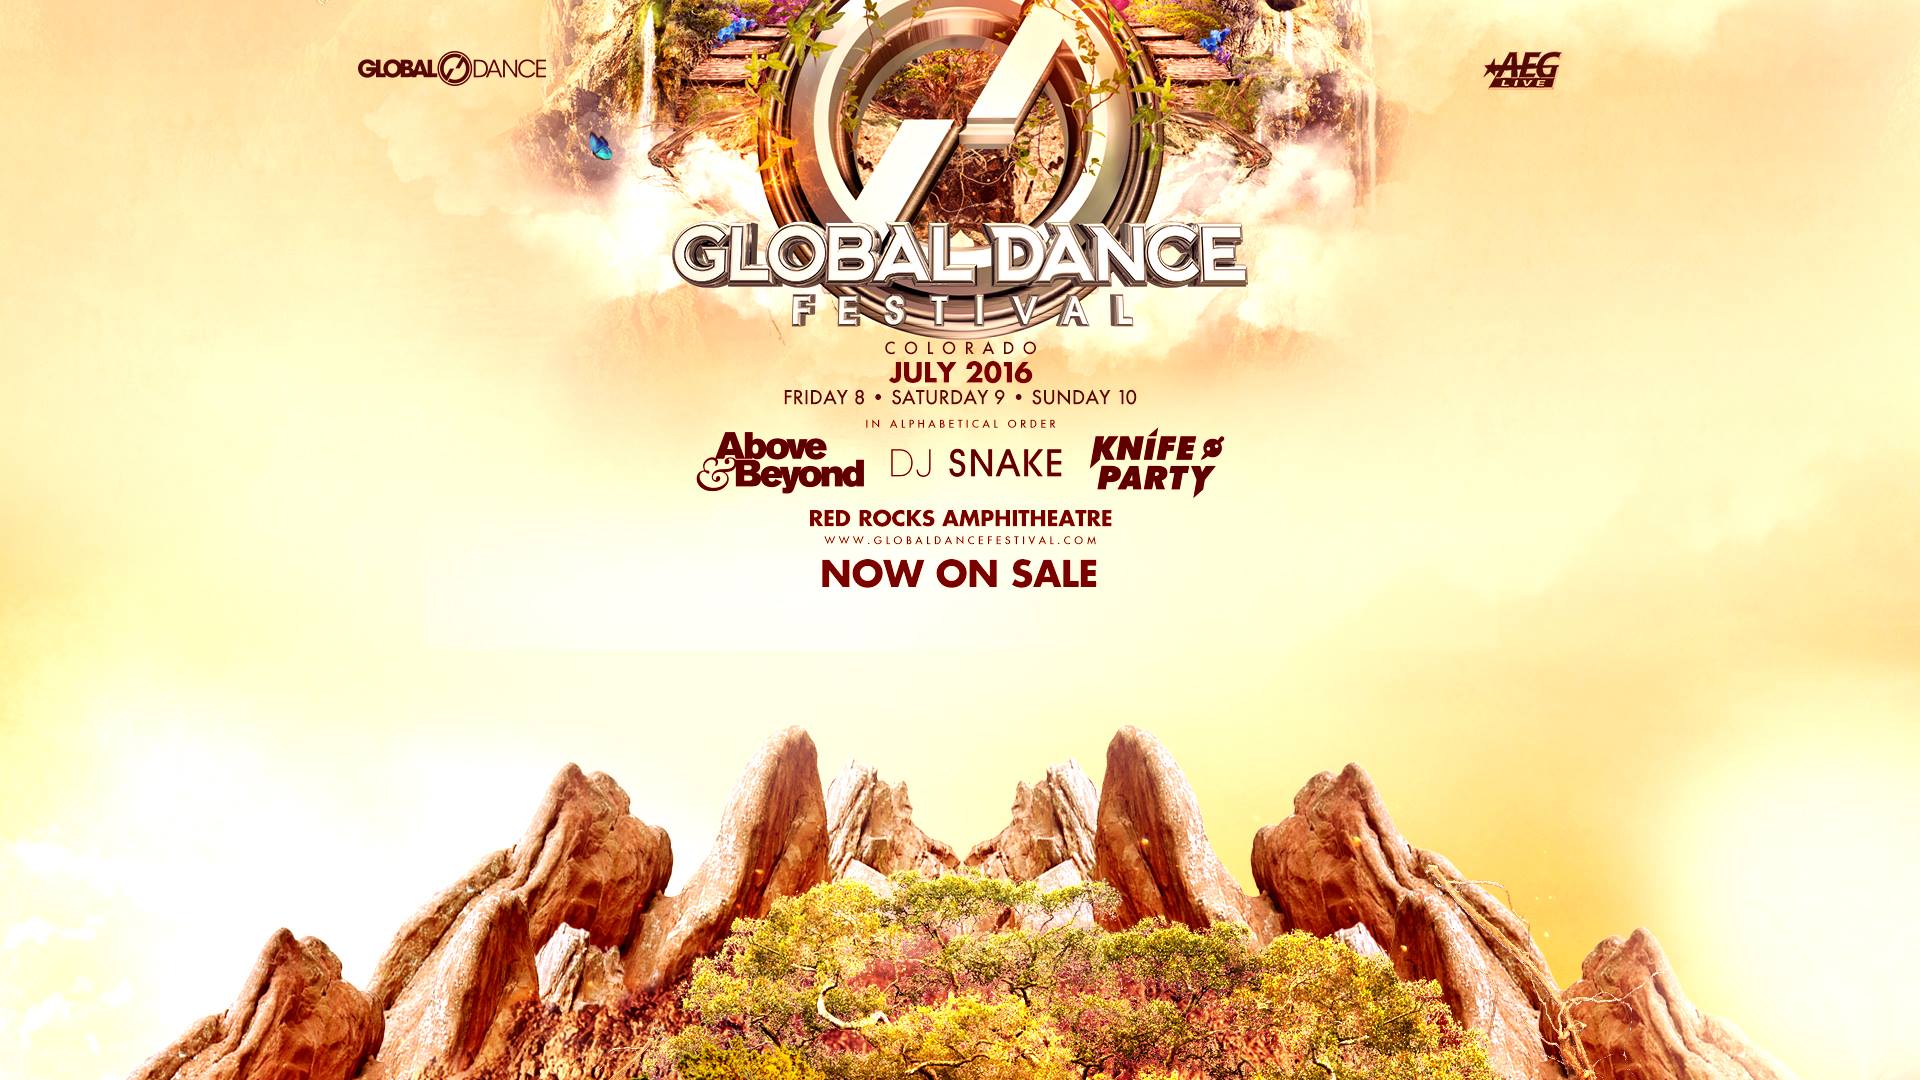 Global Dance Festival 2016 Colorado